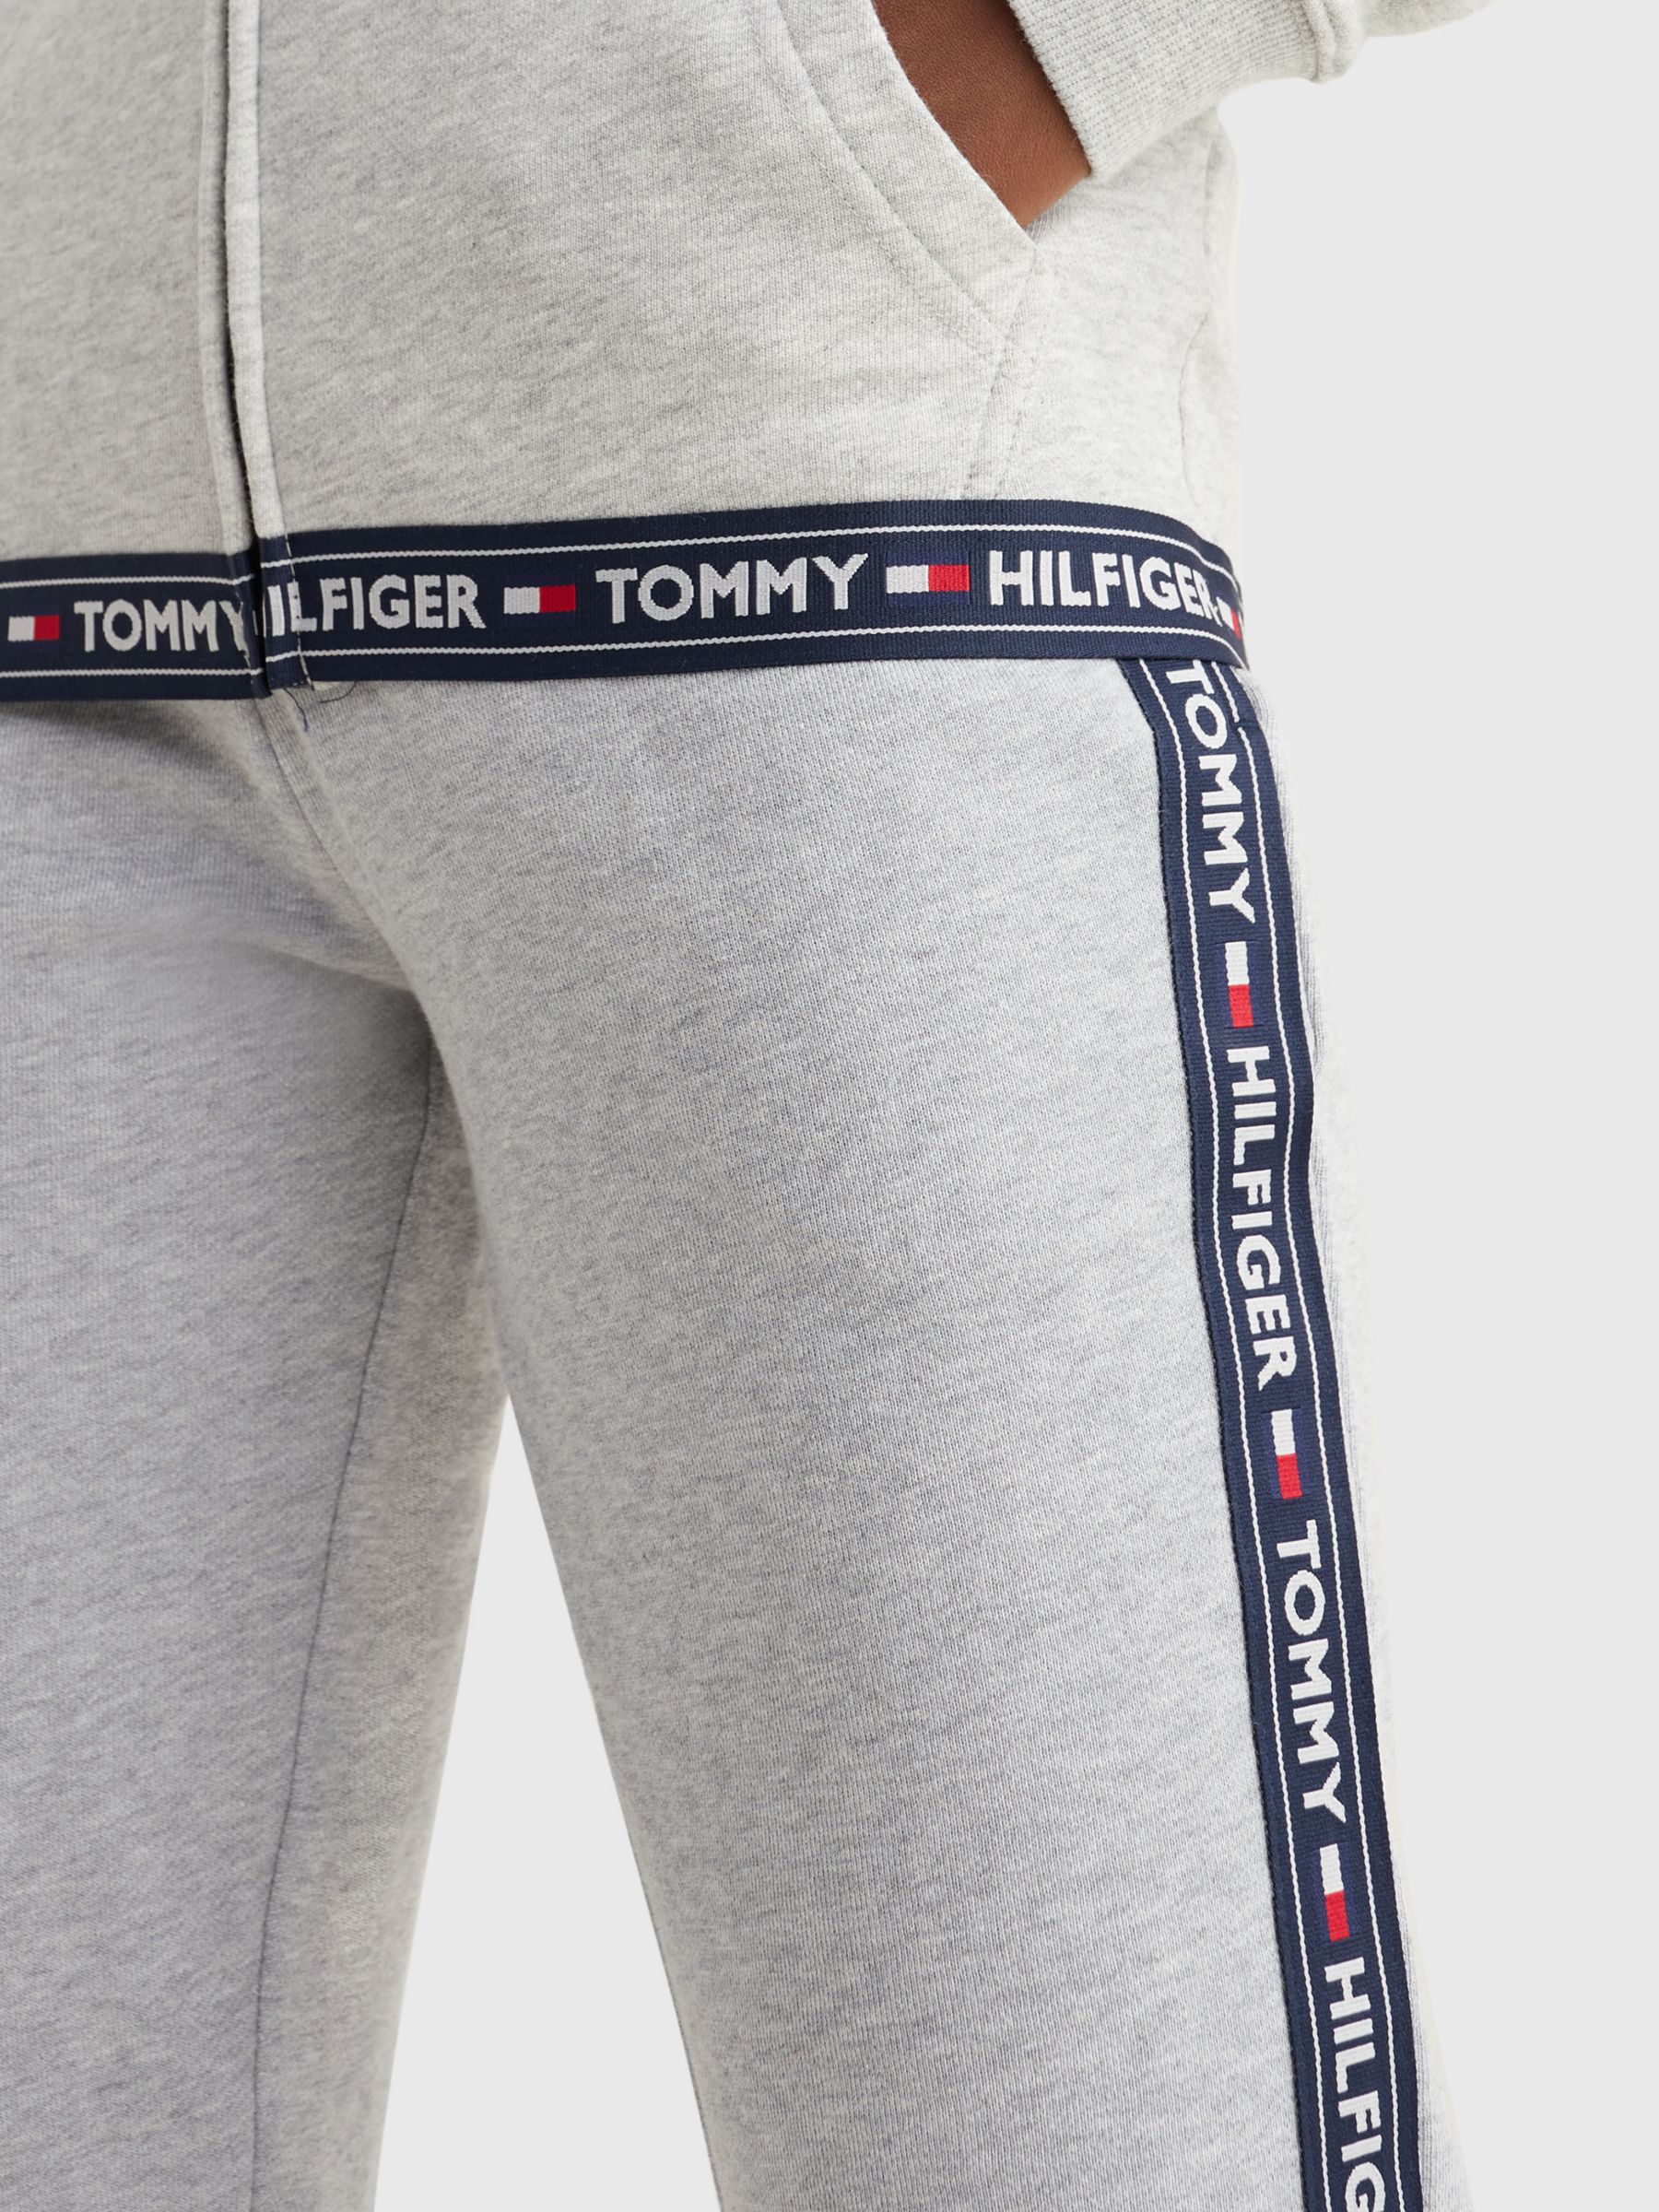 Tommy Hilfiger Women's Logo Zip Hoodie